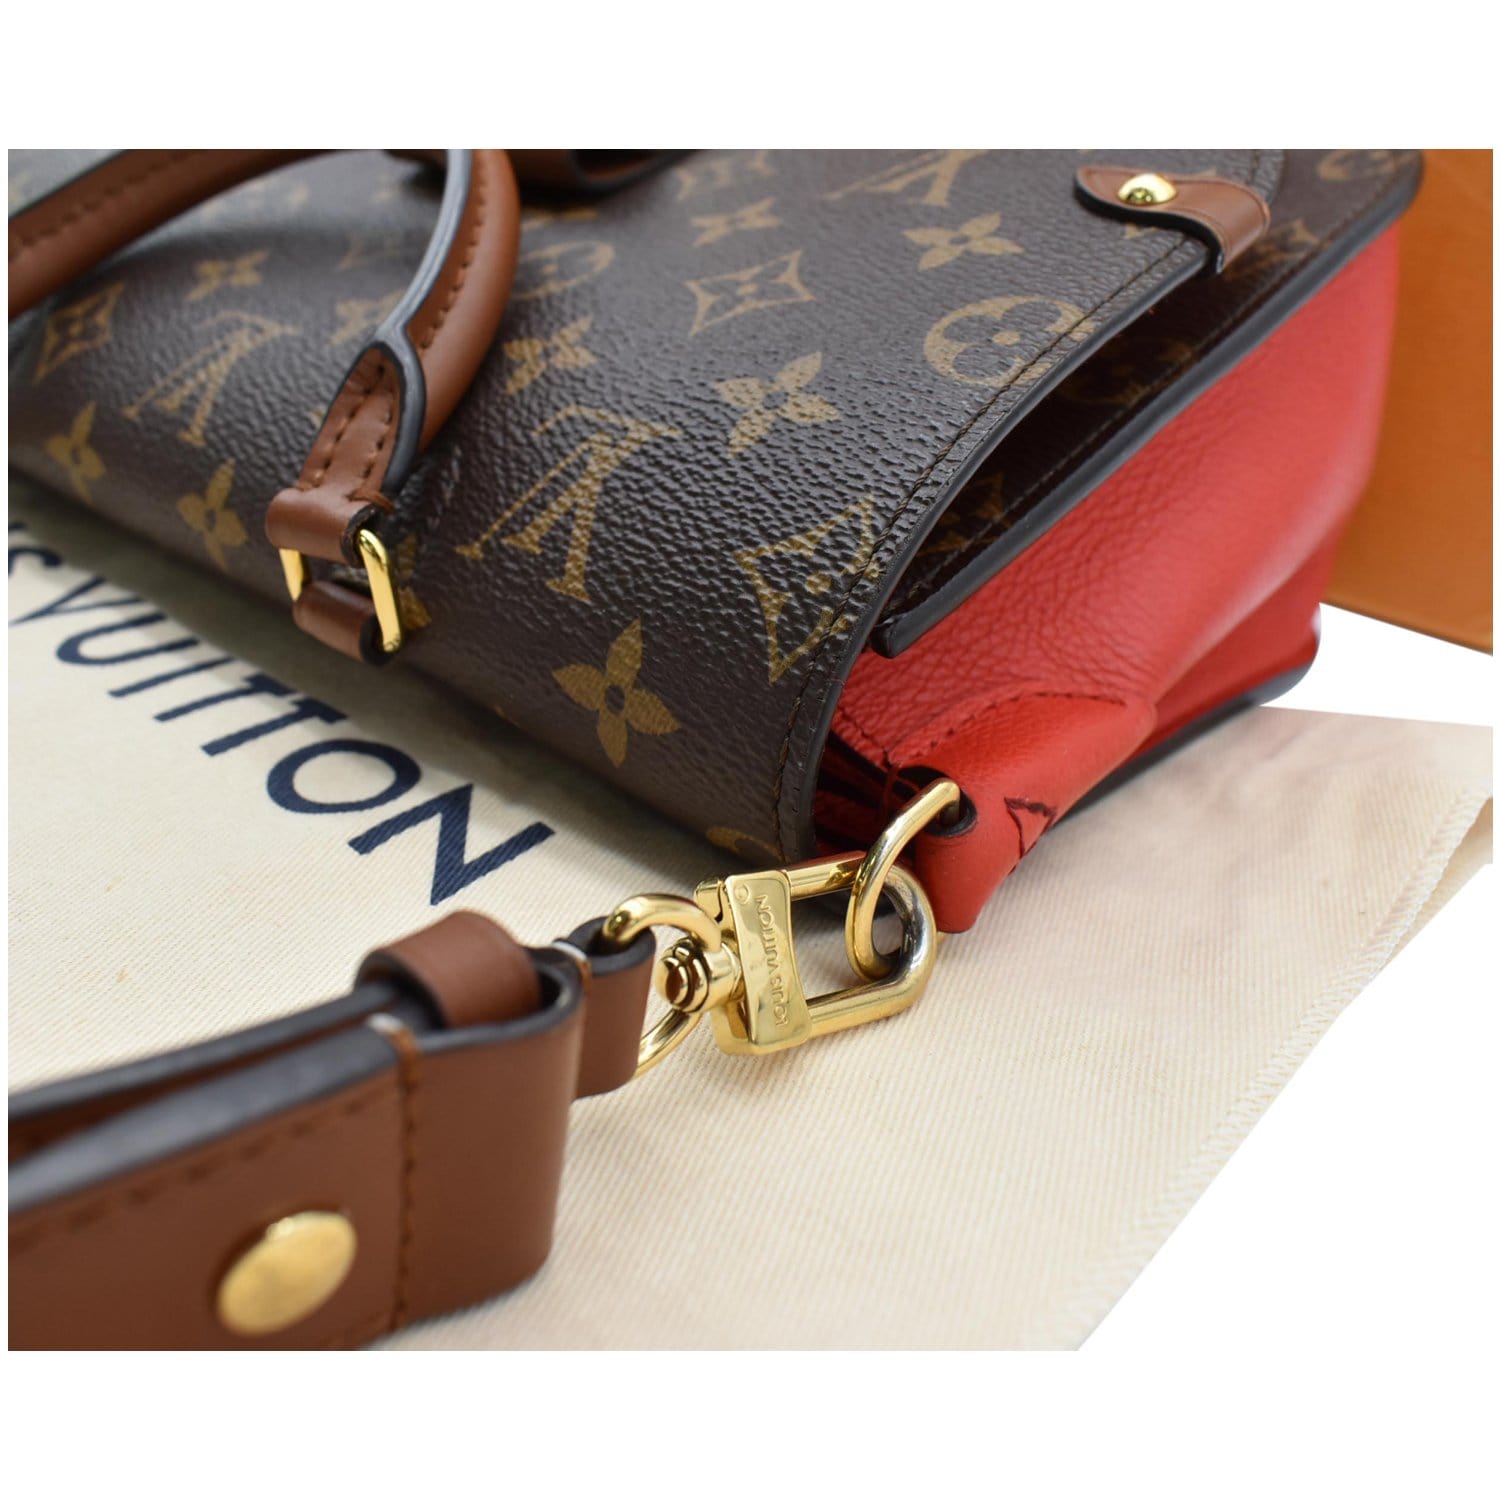 Louis Vuitton 2020 Monogram Vaugirard - Brown Handle Bags